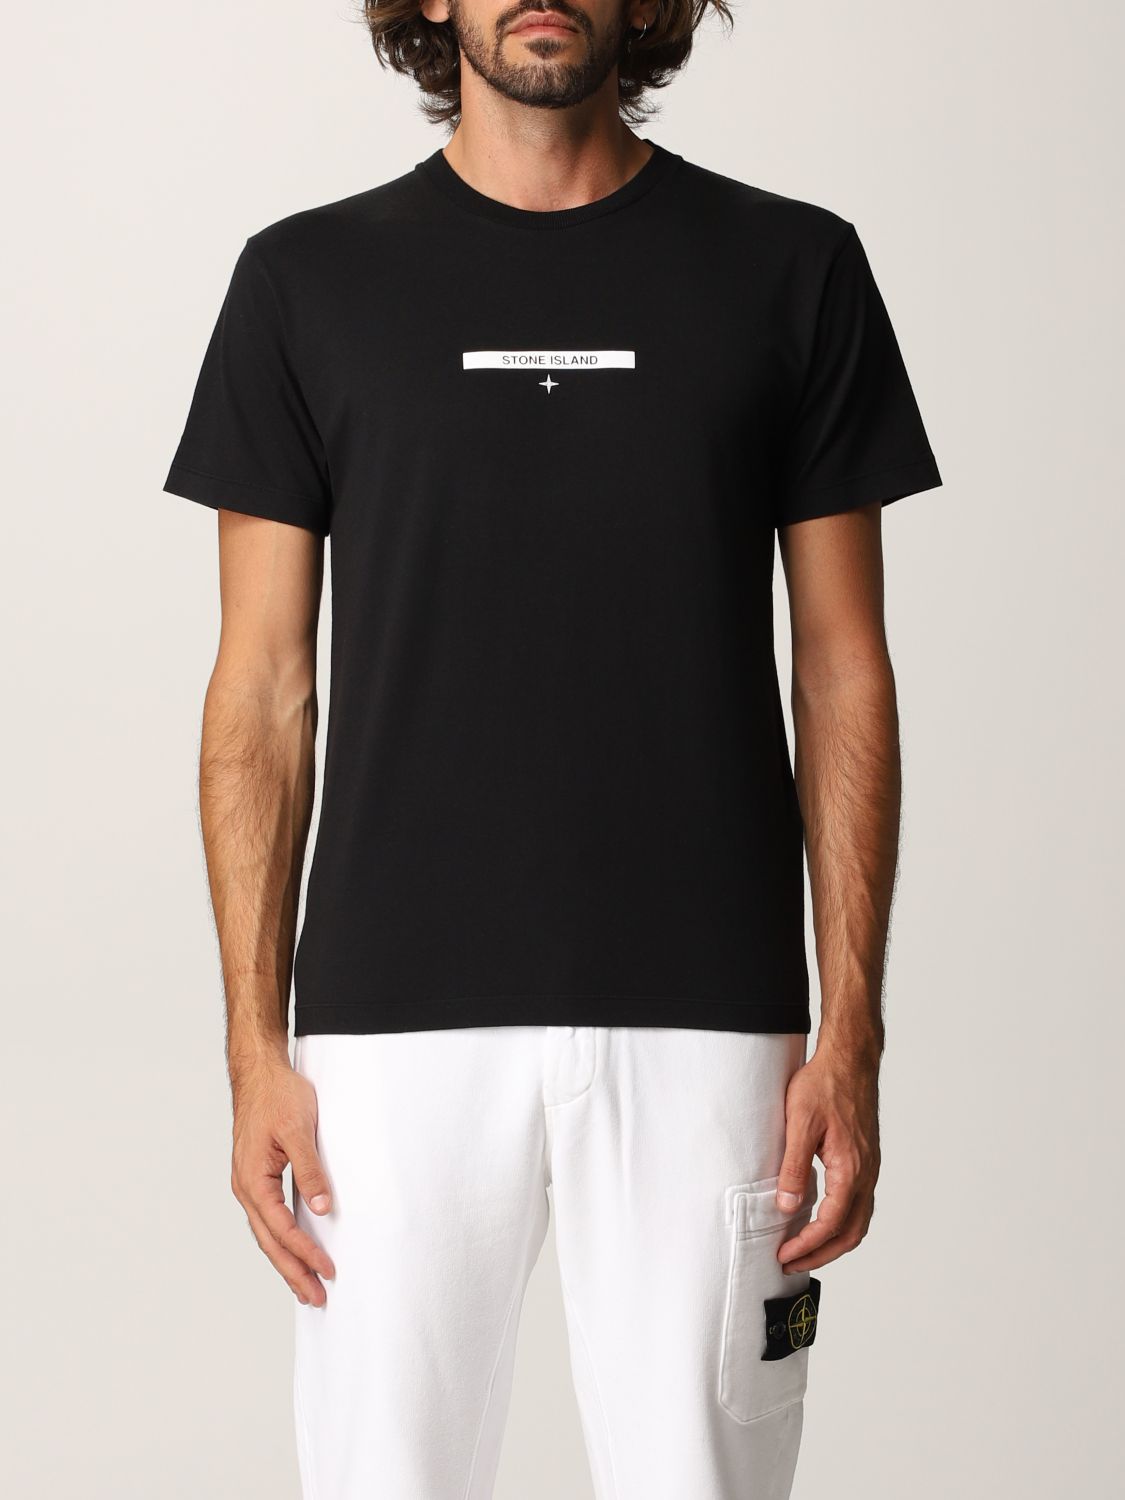 STONE ISLAND: logo T-shirt - Black | Stone Island t-shirt 2NS84 online ...